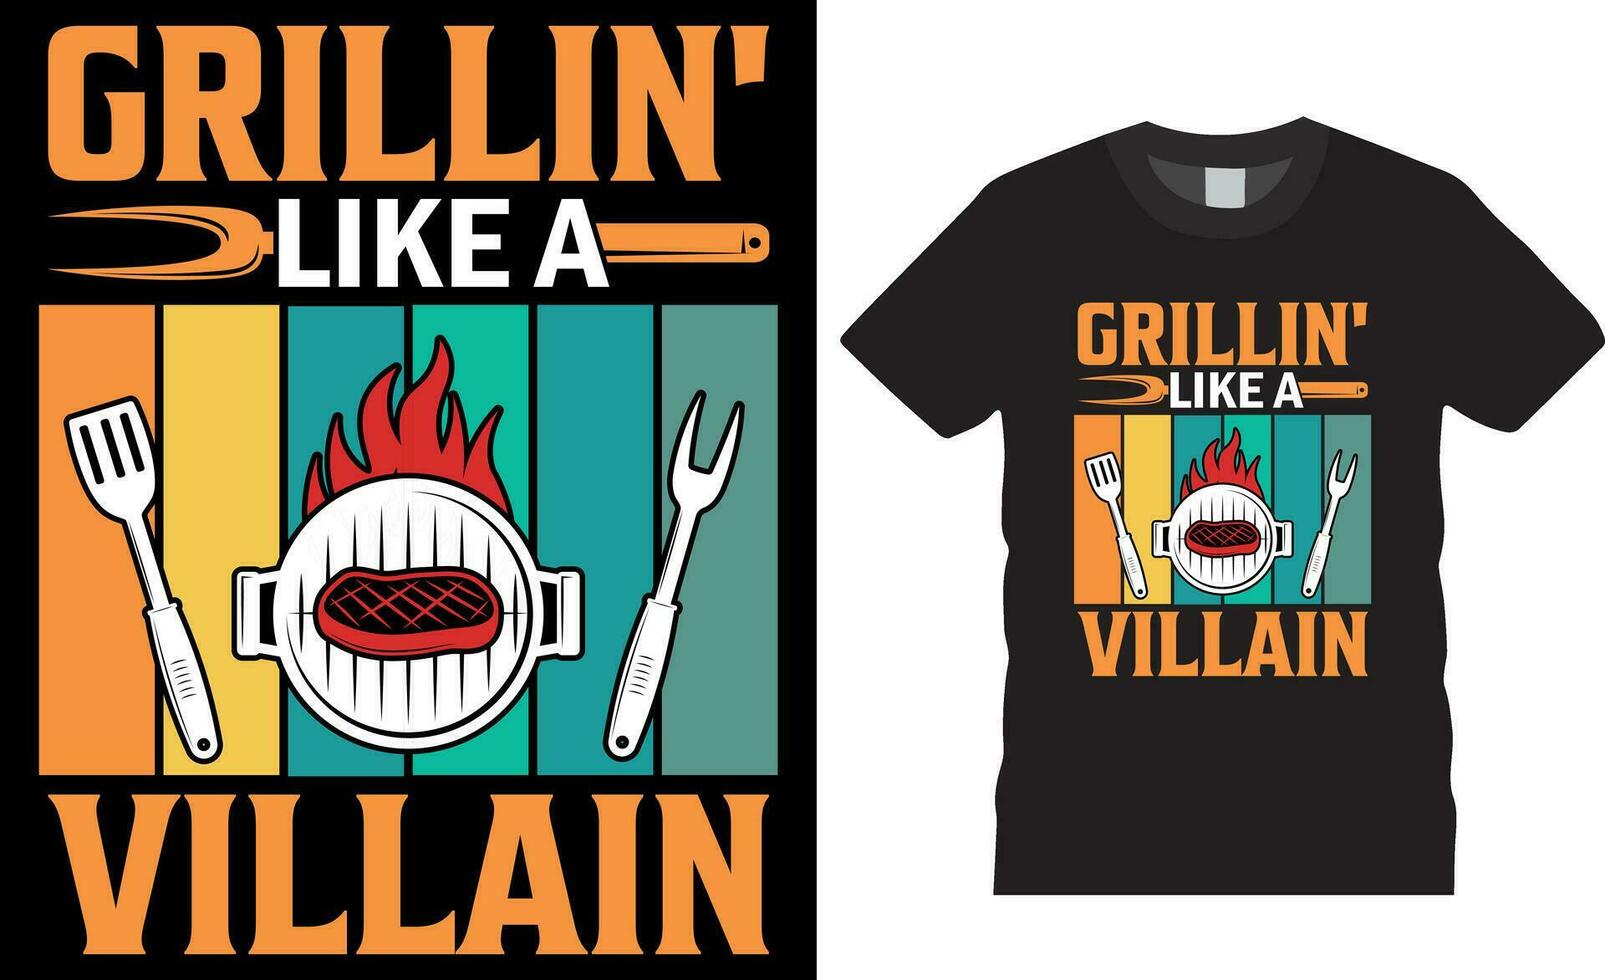 grillen' Leuk vinden een schurk grappig cookout bbq barbecue Mannen t-shirt ontwerp vector sjabloon.grillen' Leuk vinden een schurk